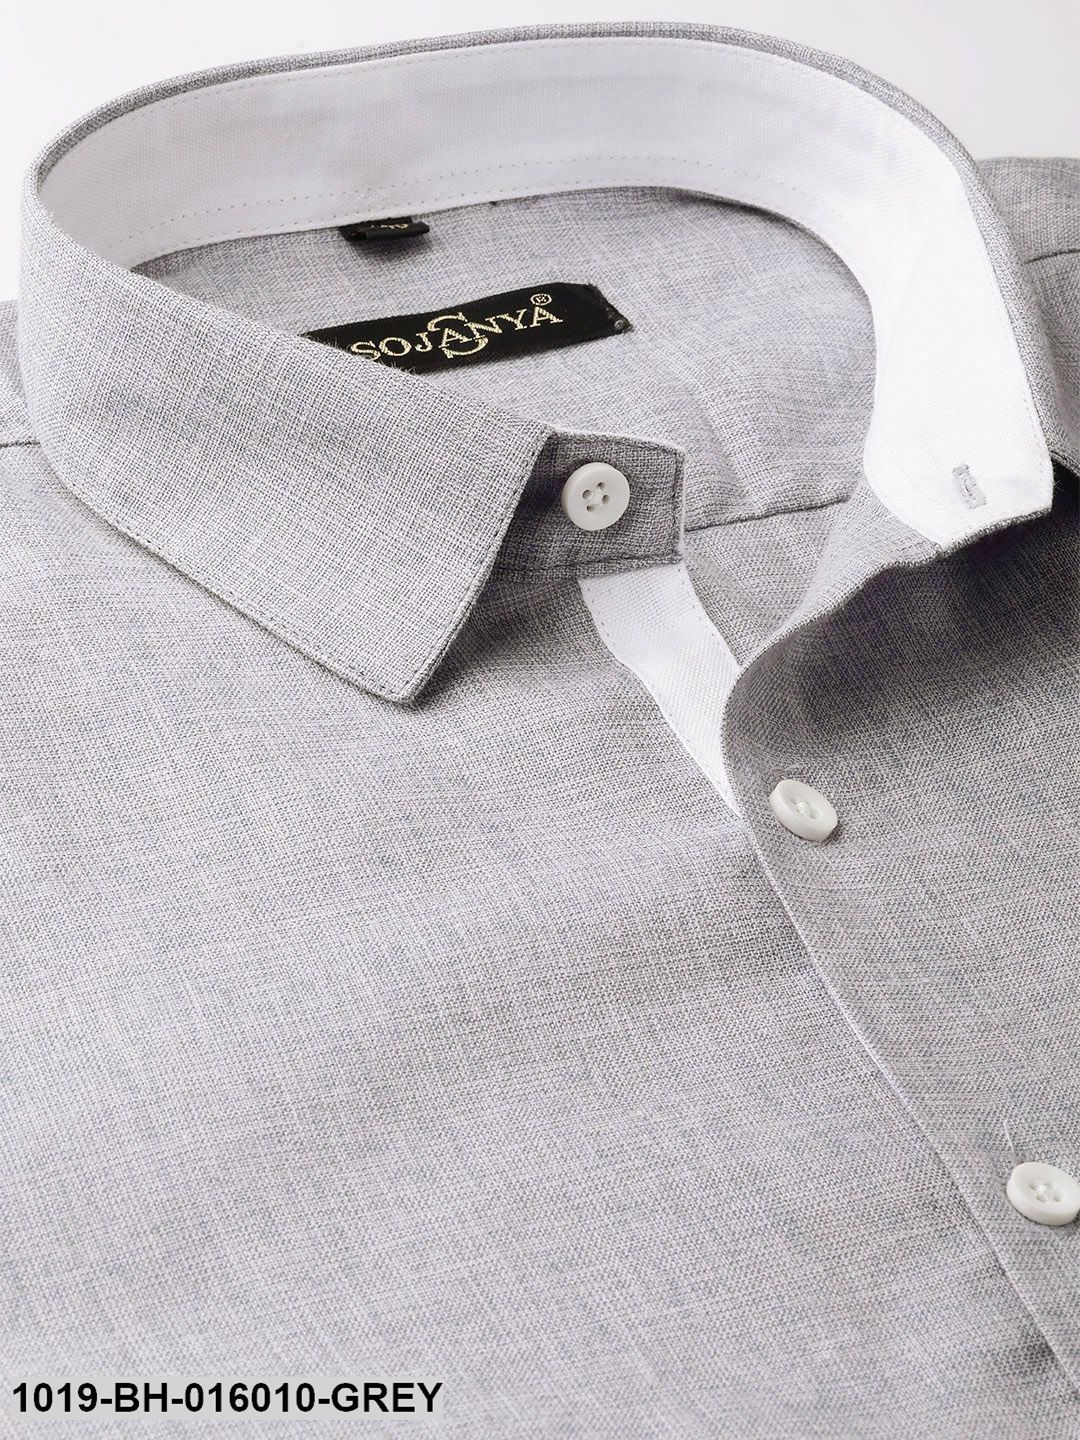 Men's Cotton Linen Light Grey Casual Shirt - Sojanya